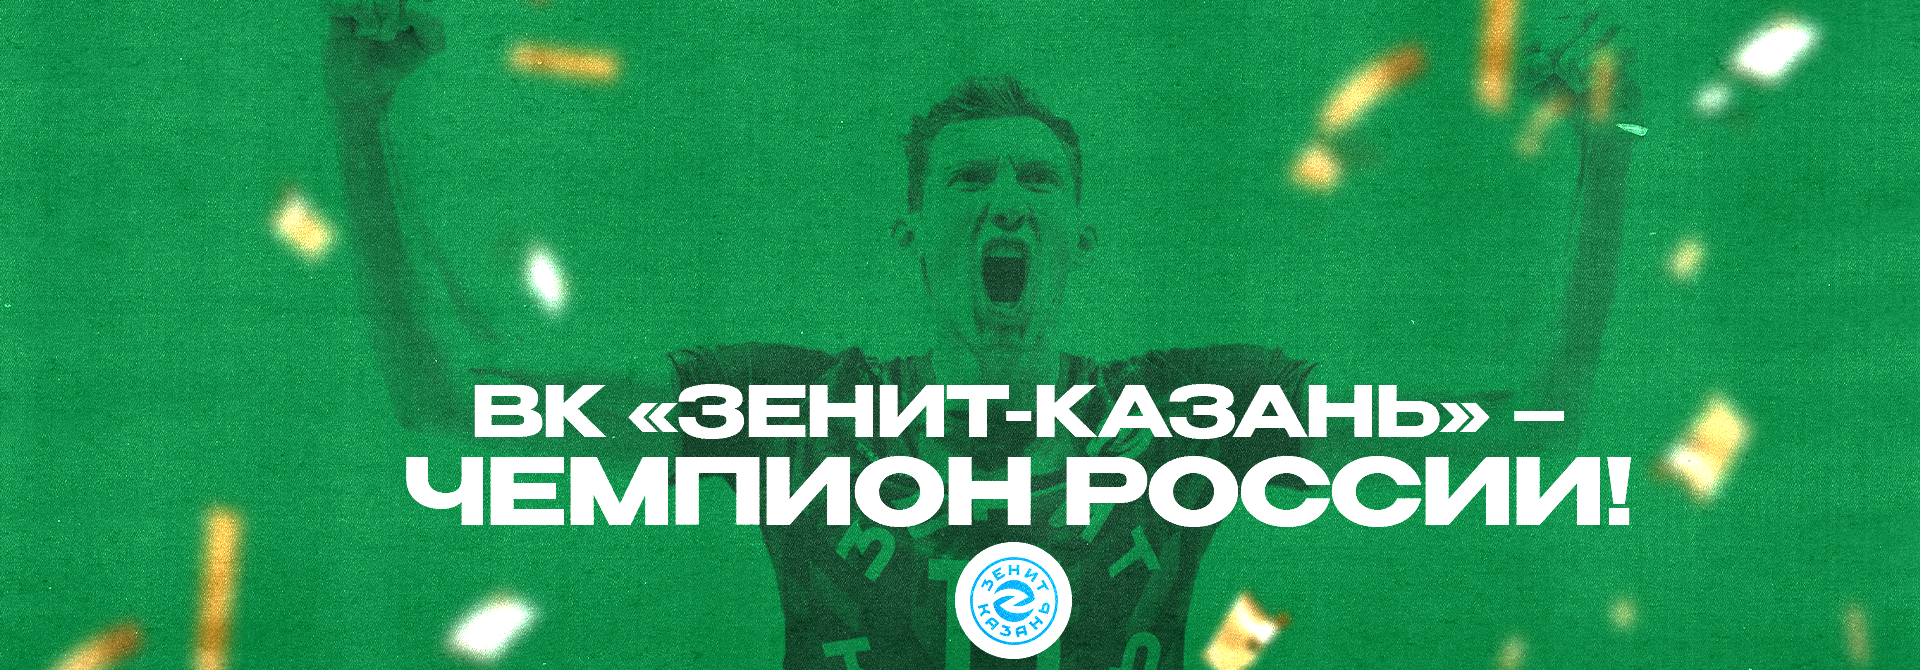 VC Zenit-Kazan has defended the championship title!